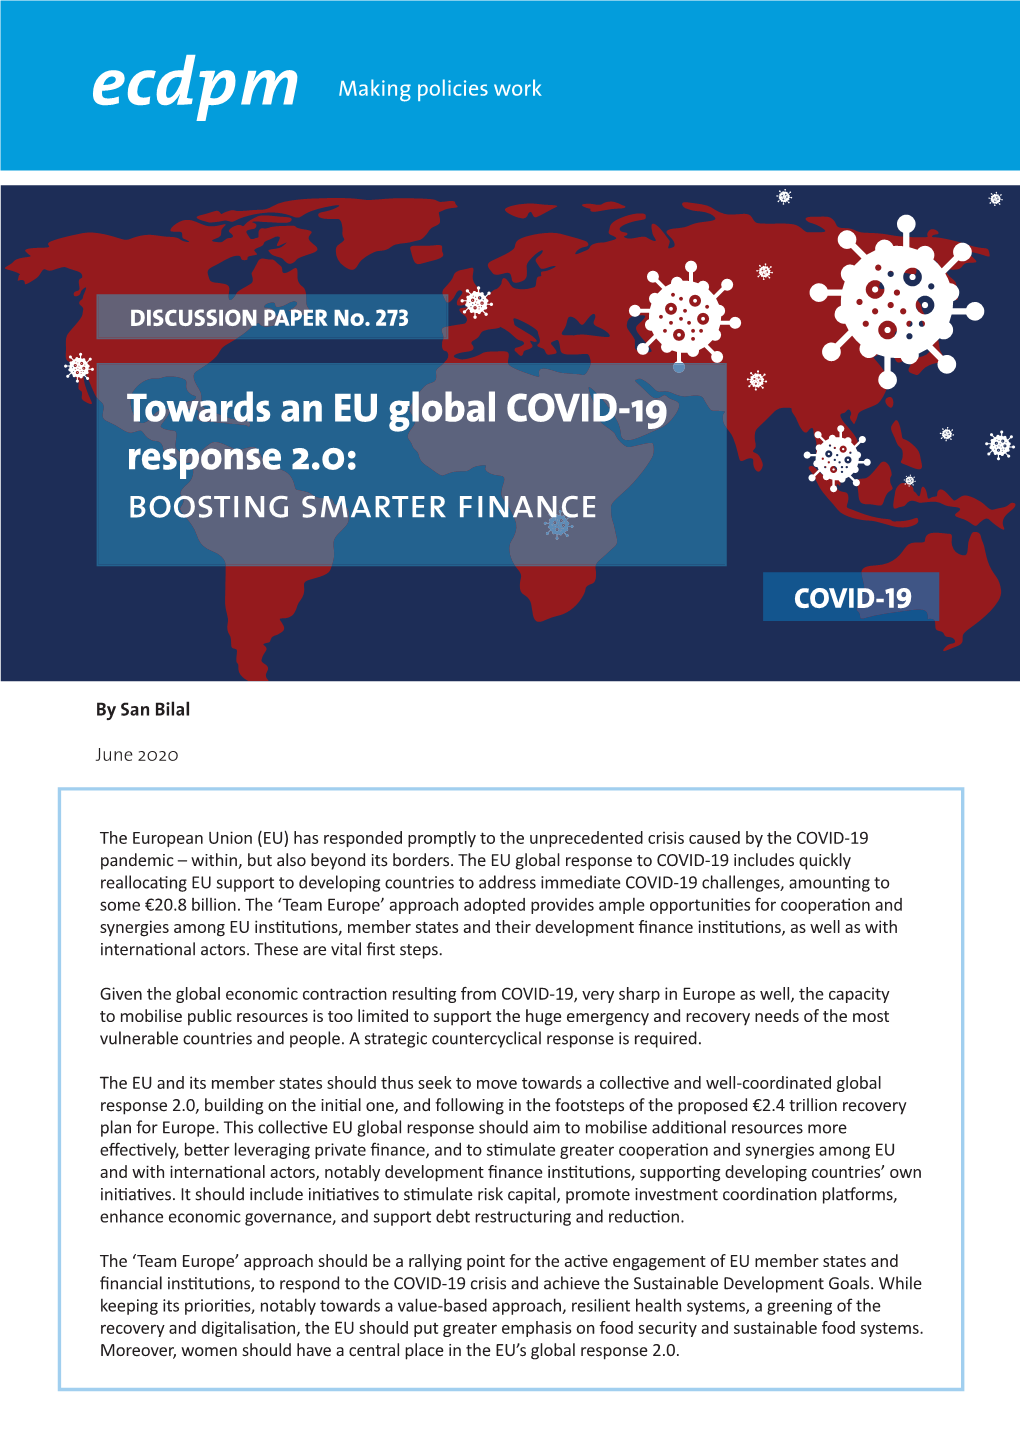 Towards an EU Global COVID-19 Response 2.0: Boosting Smarter Finance